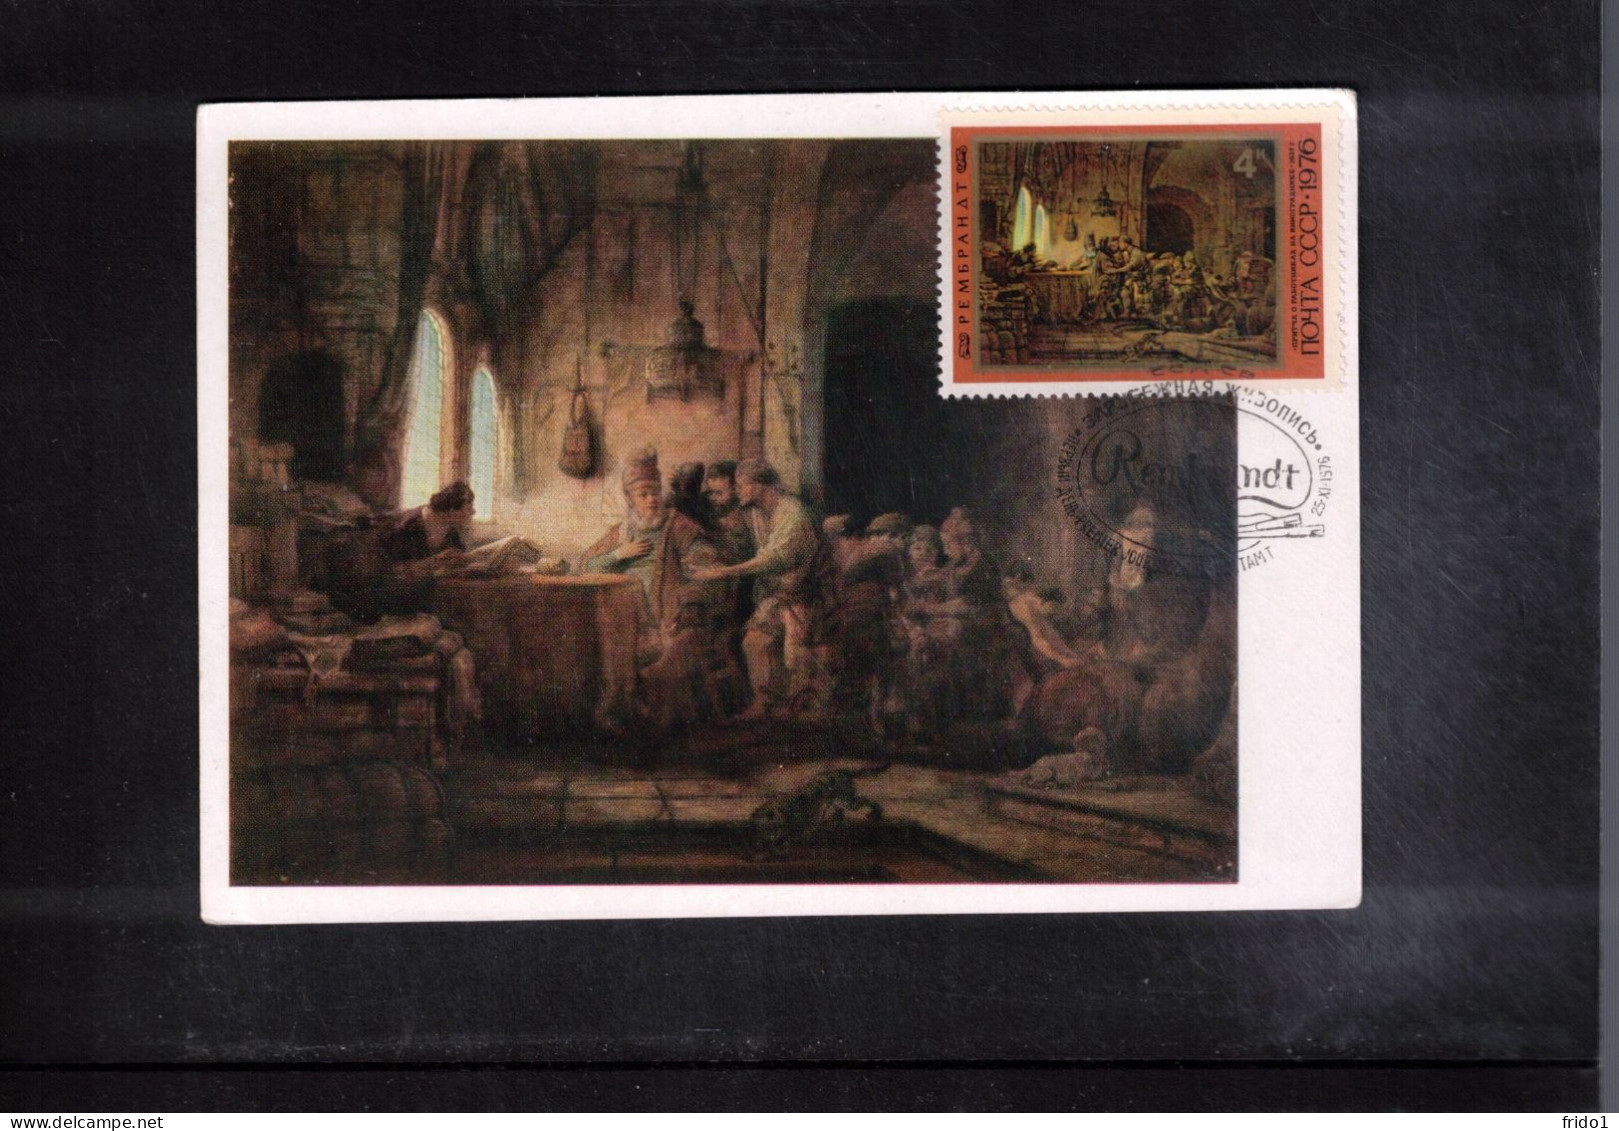 Russia USSR 1976 Art - Rembrandt Painting Interesting Maximum Card - Rembrandt